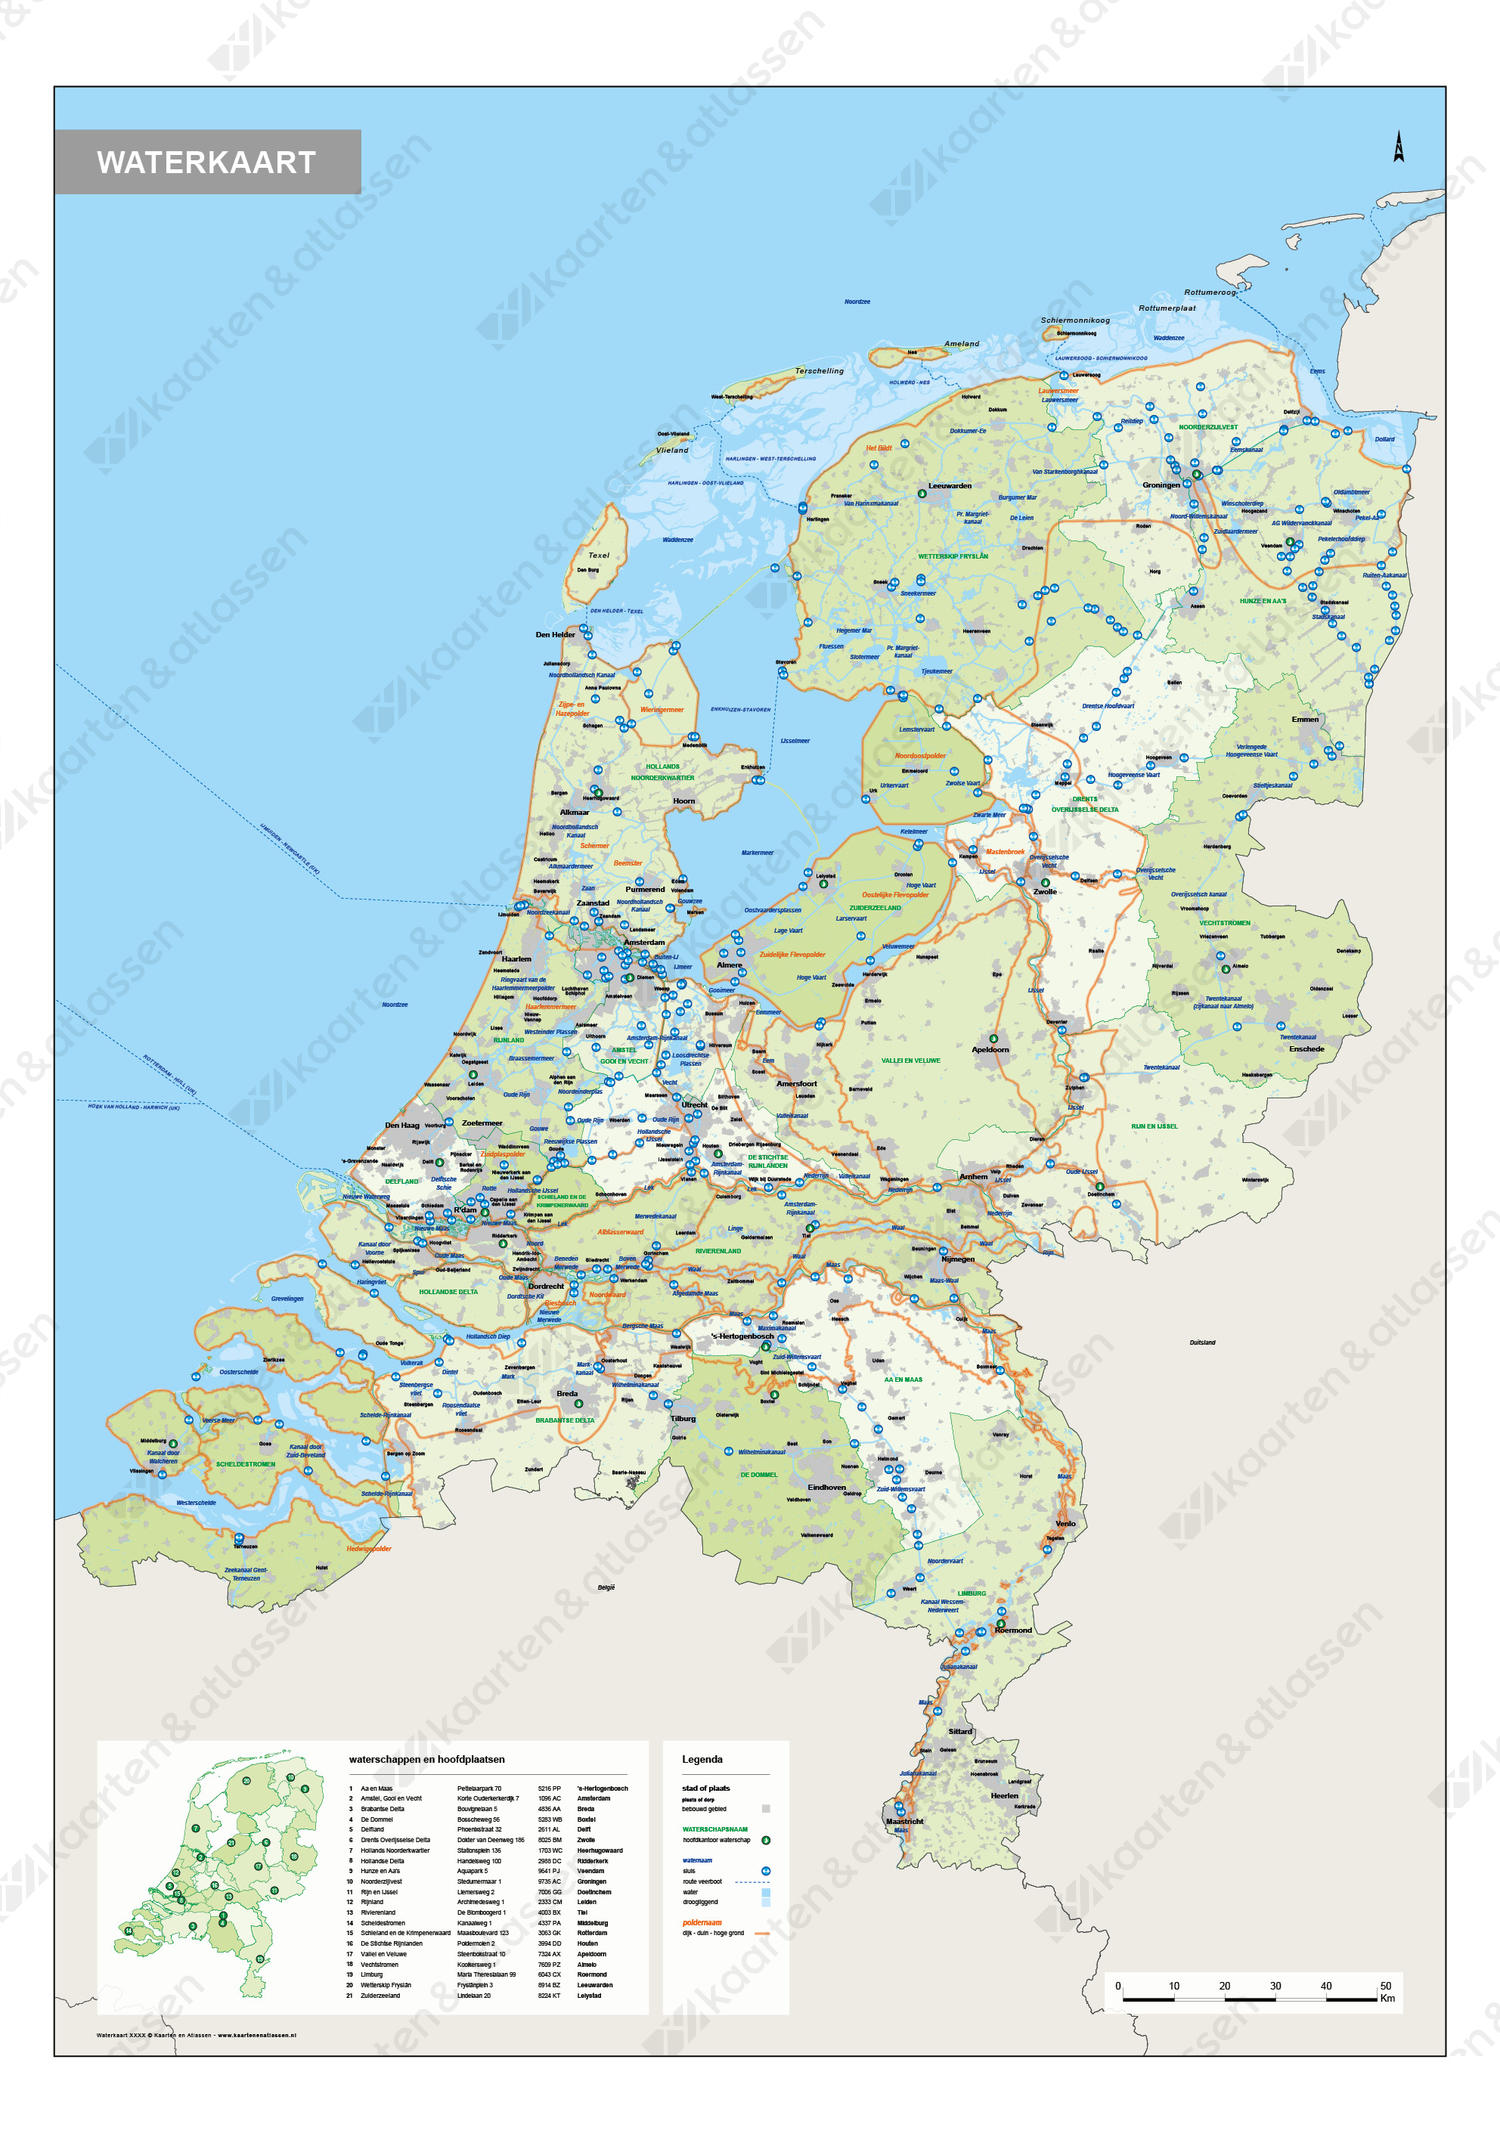 Digitale Waterkaart van Nederland